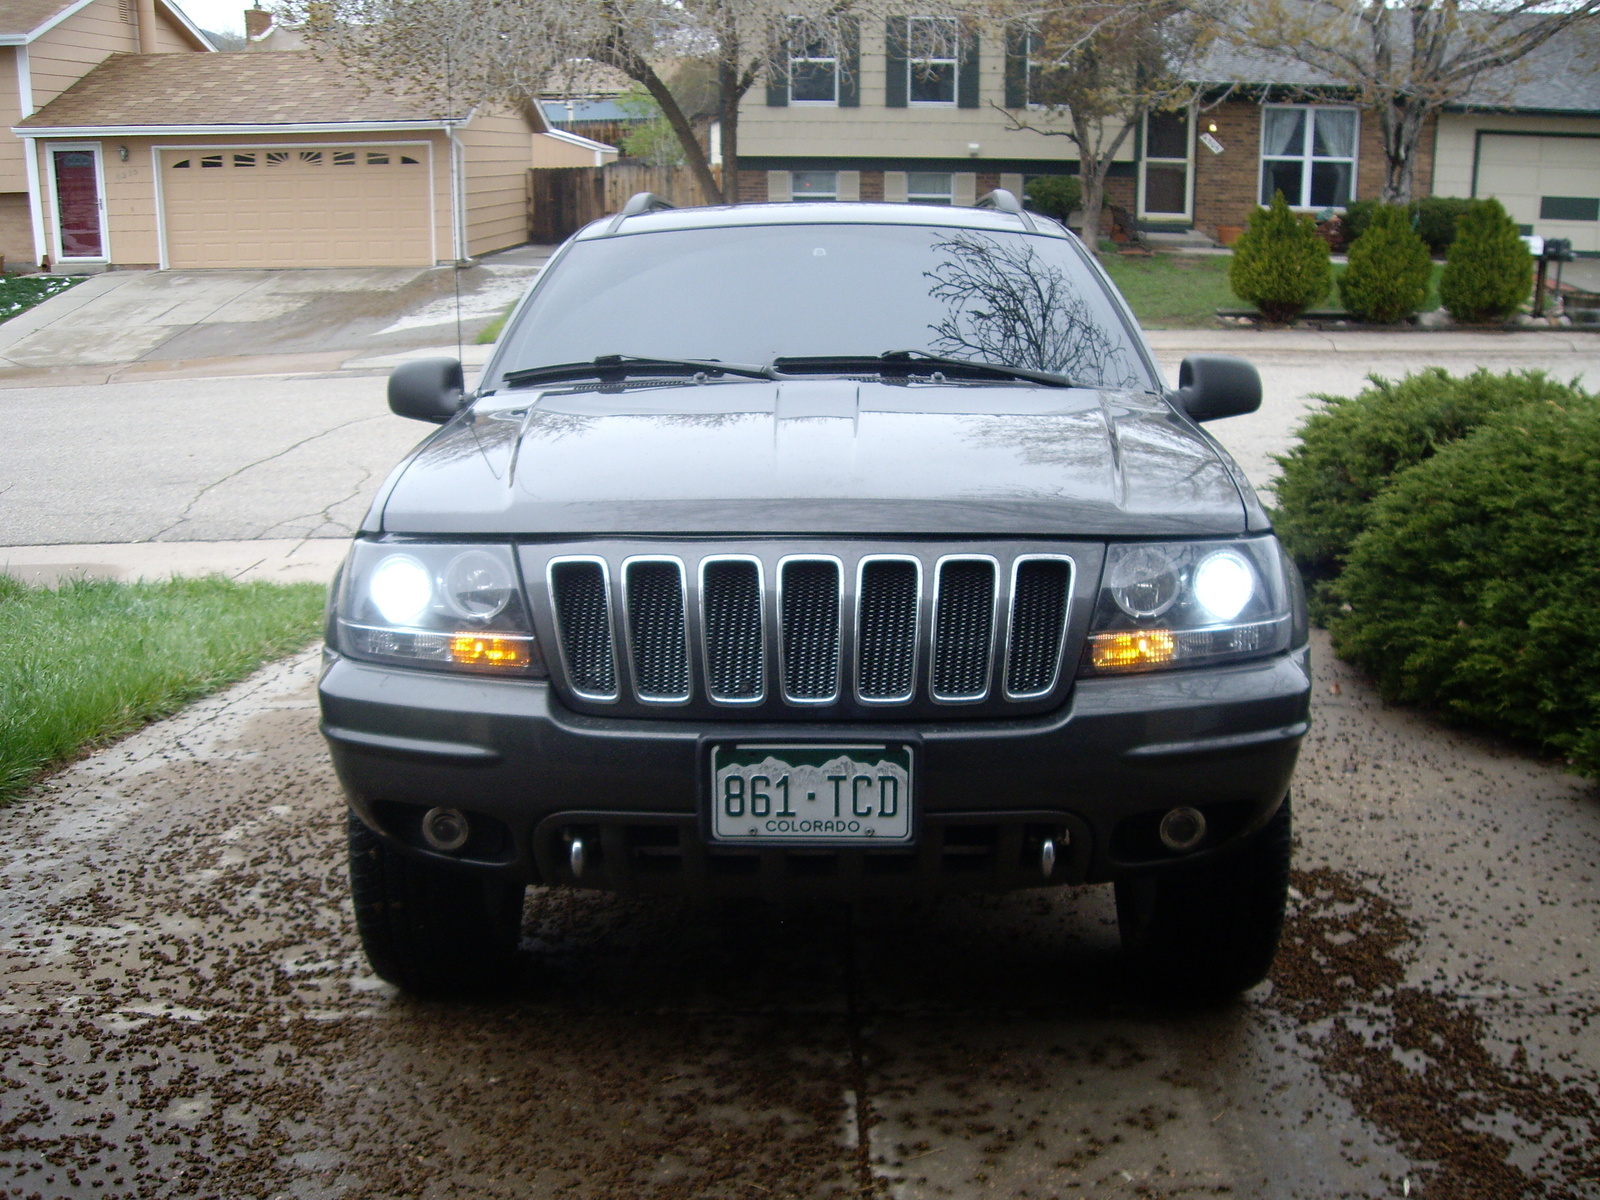 2012 Jeep grand cherokee laredo 4d sport utility reviews #4